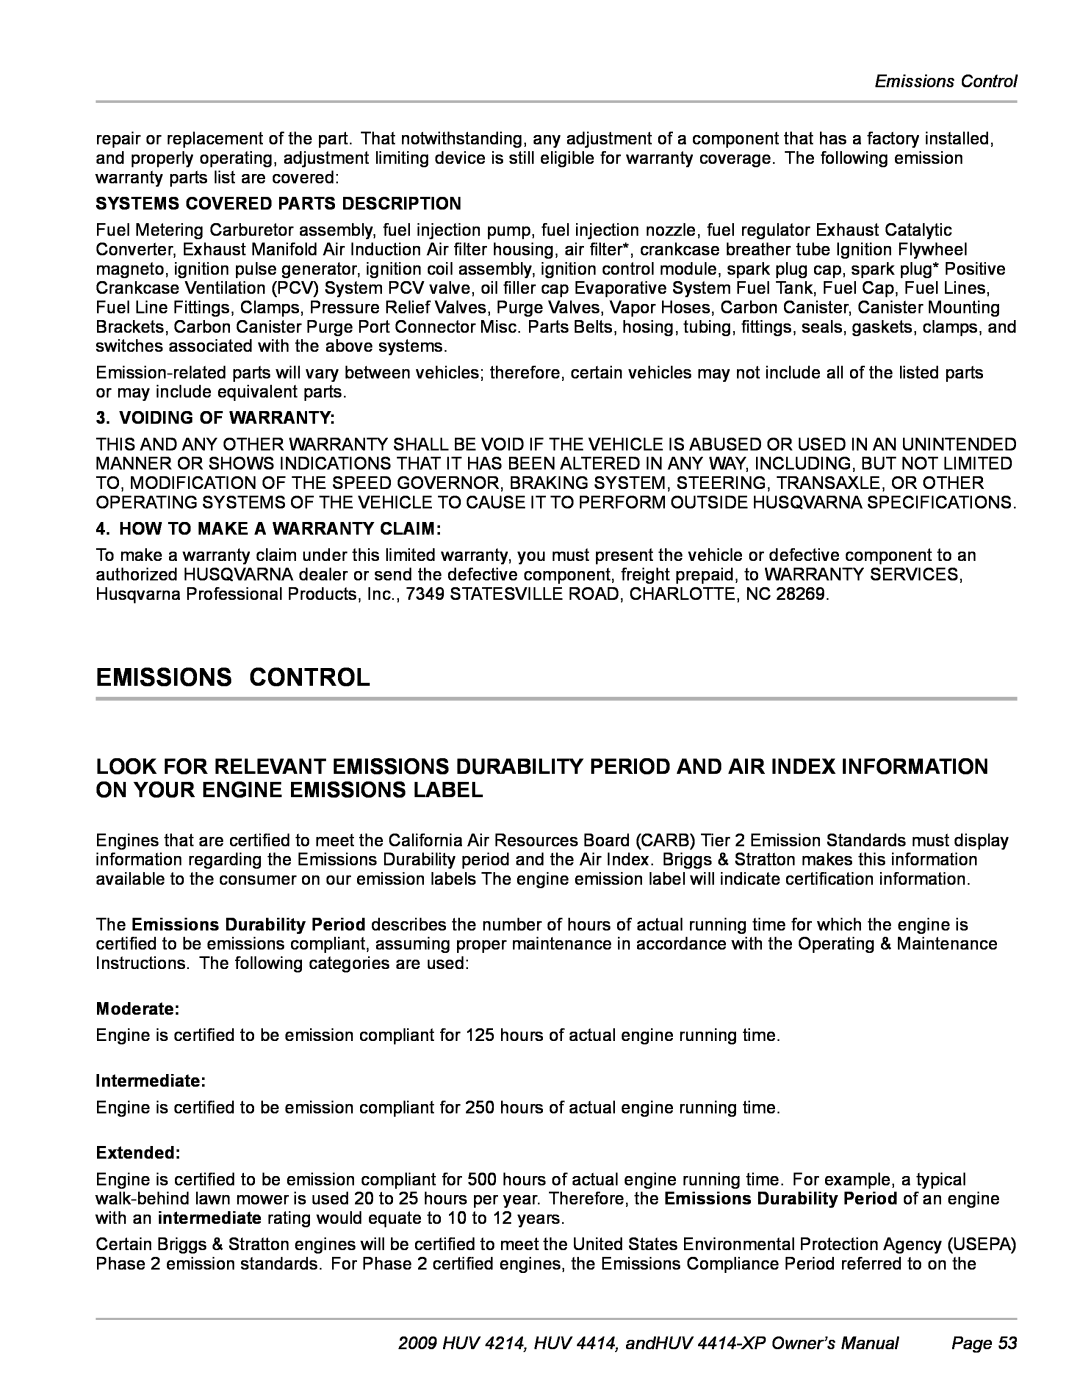 Husqvarna owner manual Emissions Control, HUV 4214, HUV 4414, andHUV 4414-XP Owner’s Manual, Page 